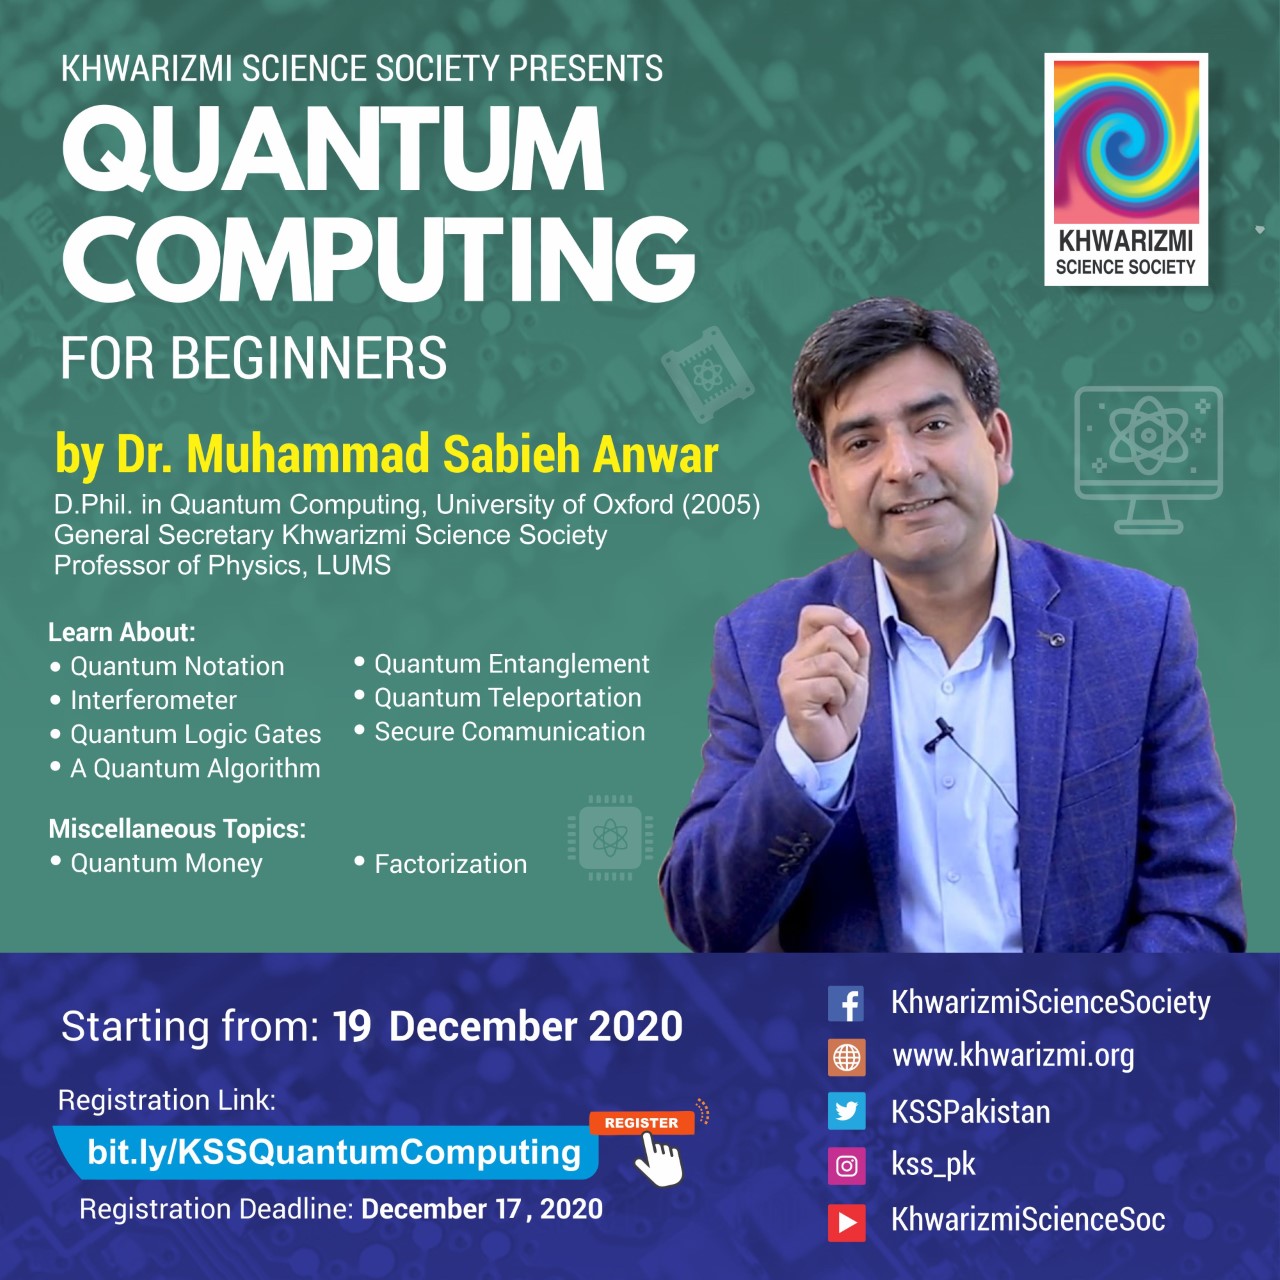 Quantum Computing for Beginners by Dr Sabieh Anwar Poster.jpg